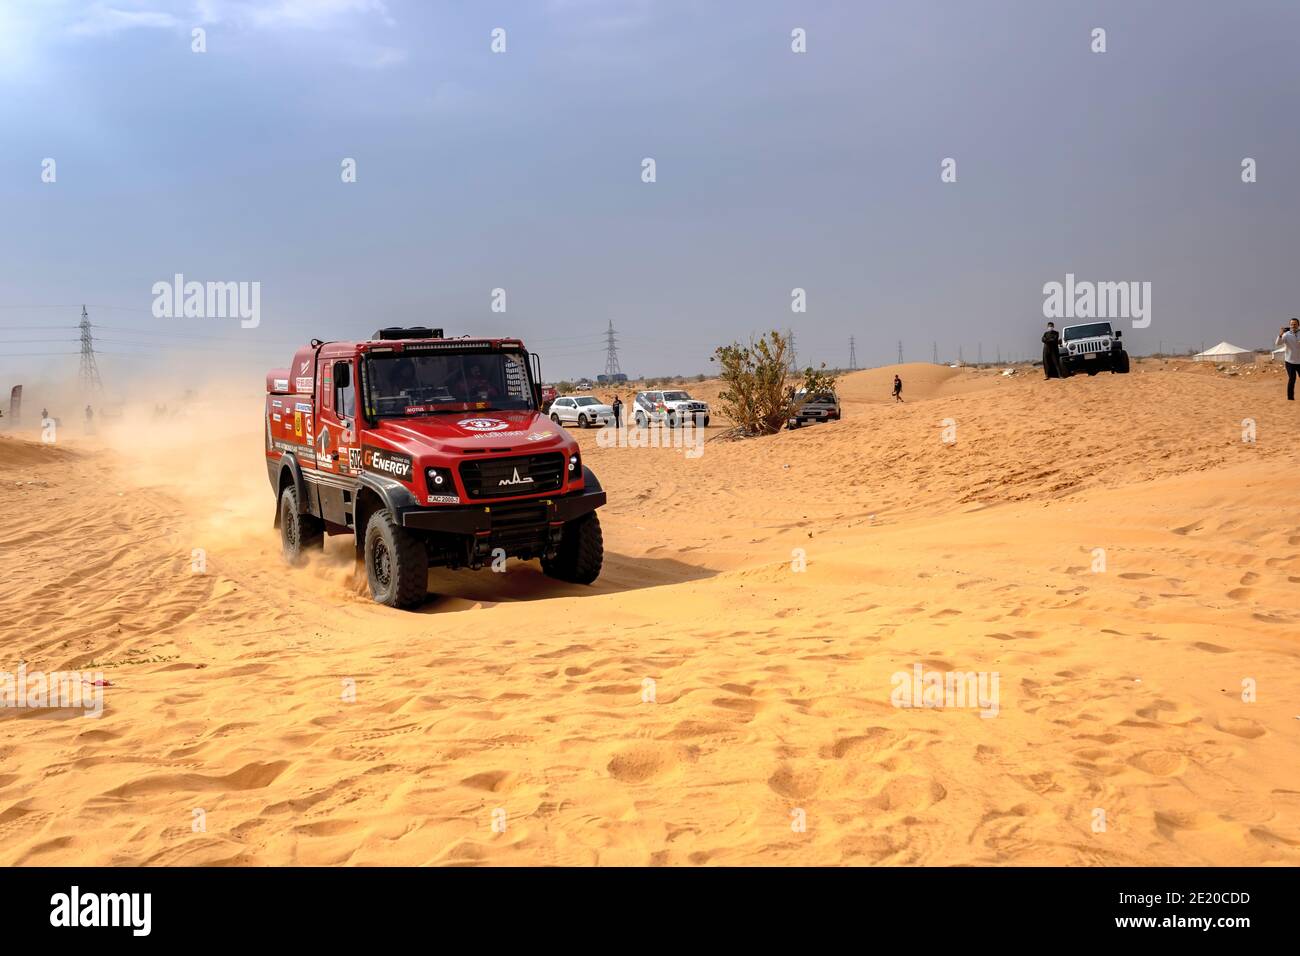 Horimlaa, Saudi Arabia - January 7, 2021: MAZ racing truck of Team MAZ Sportauto running Stage 5 of the 2021 Dakar Rally Stock Photo